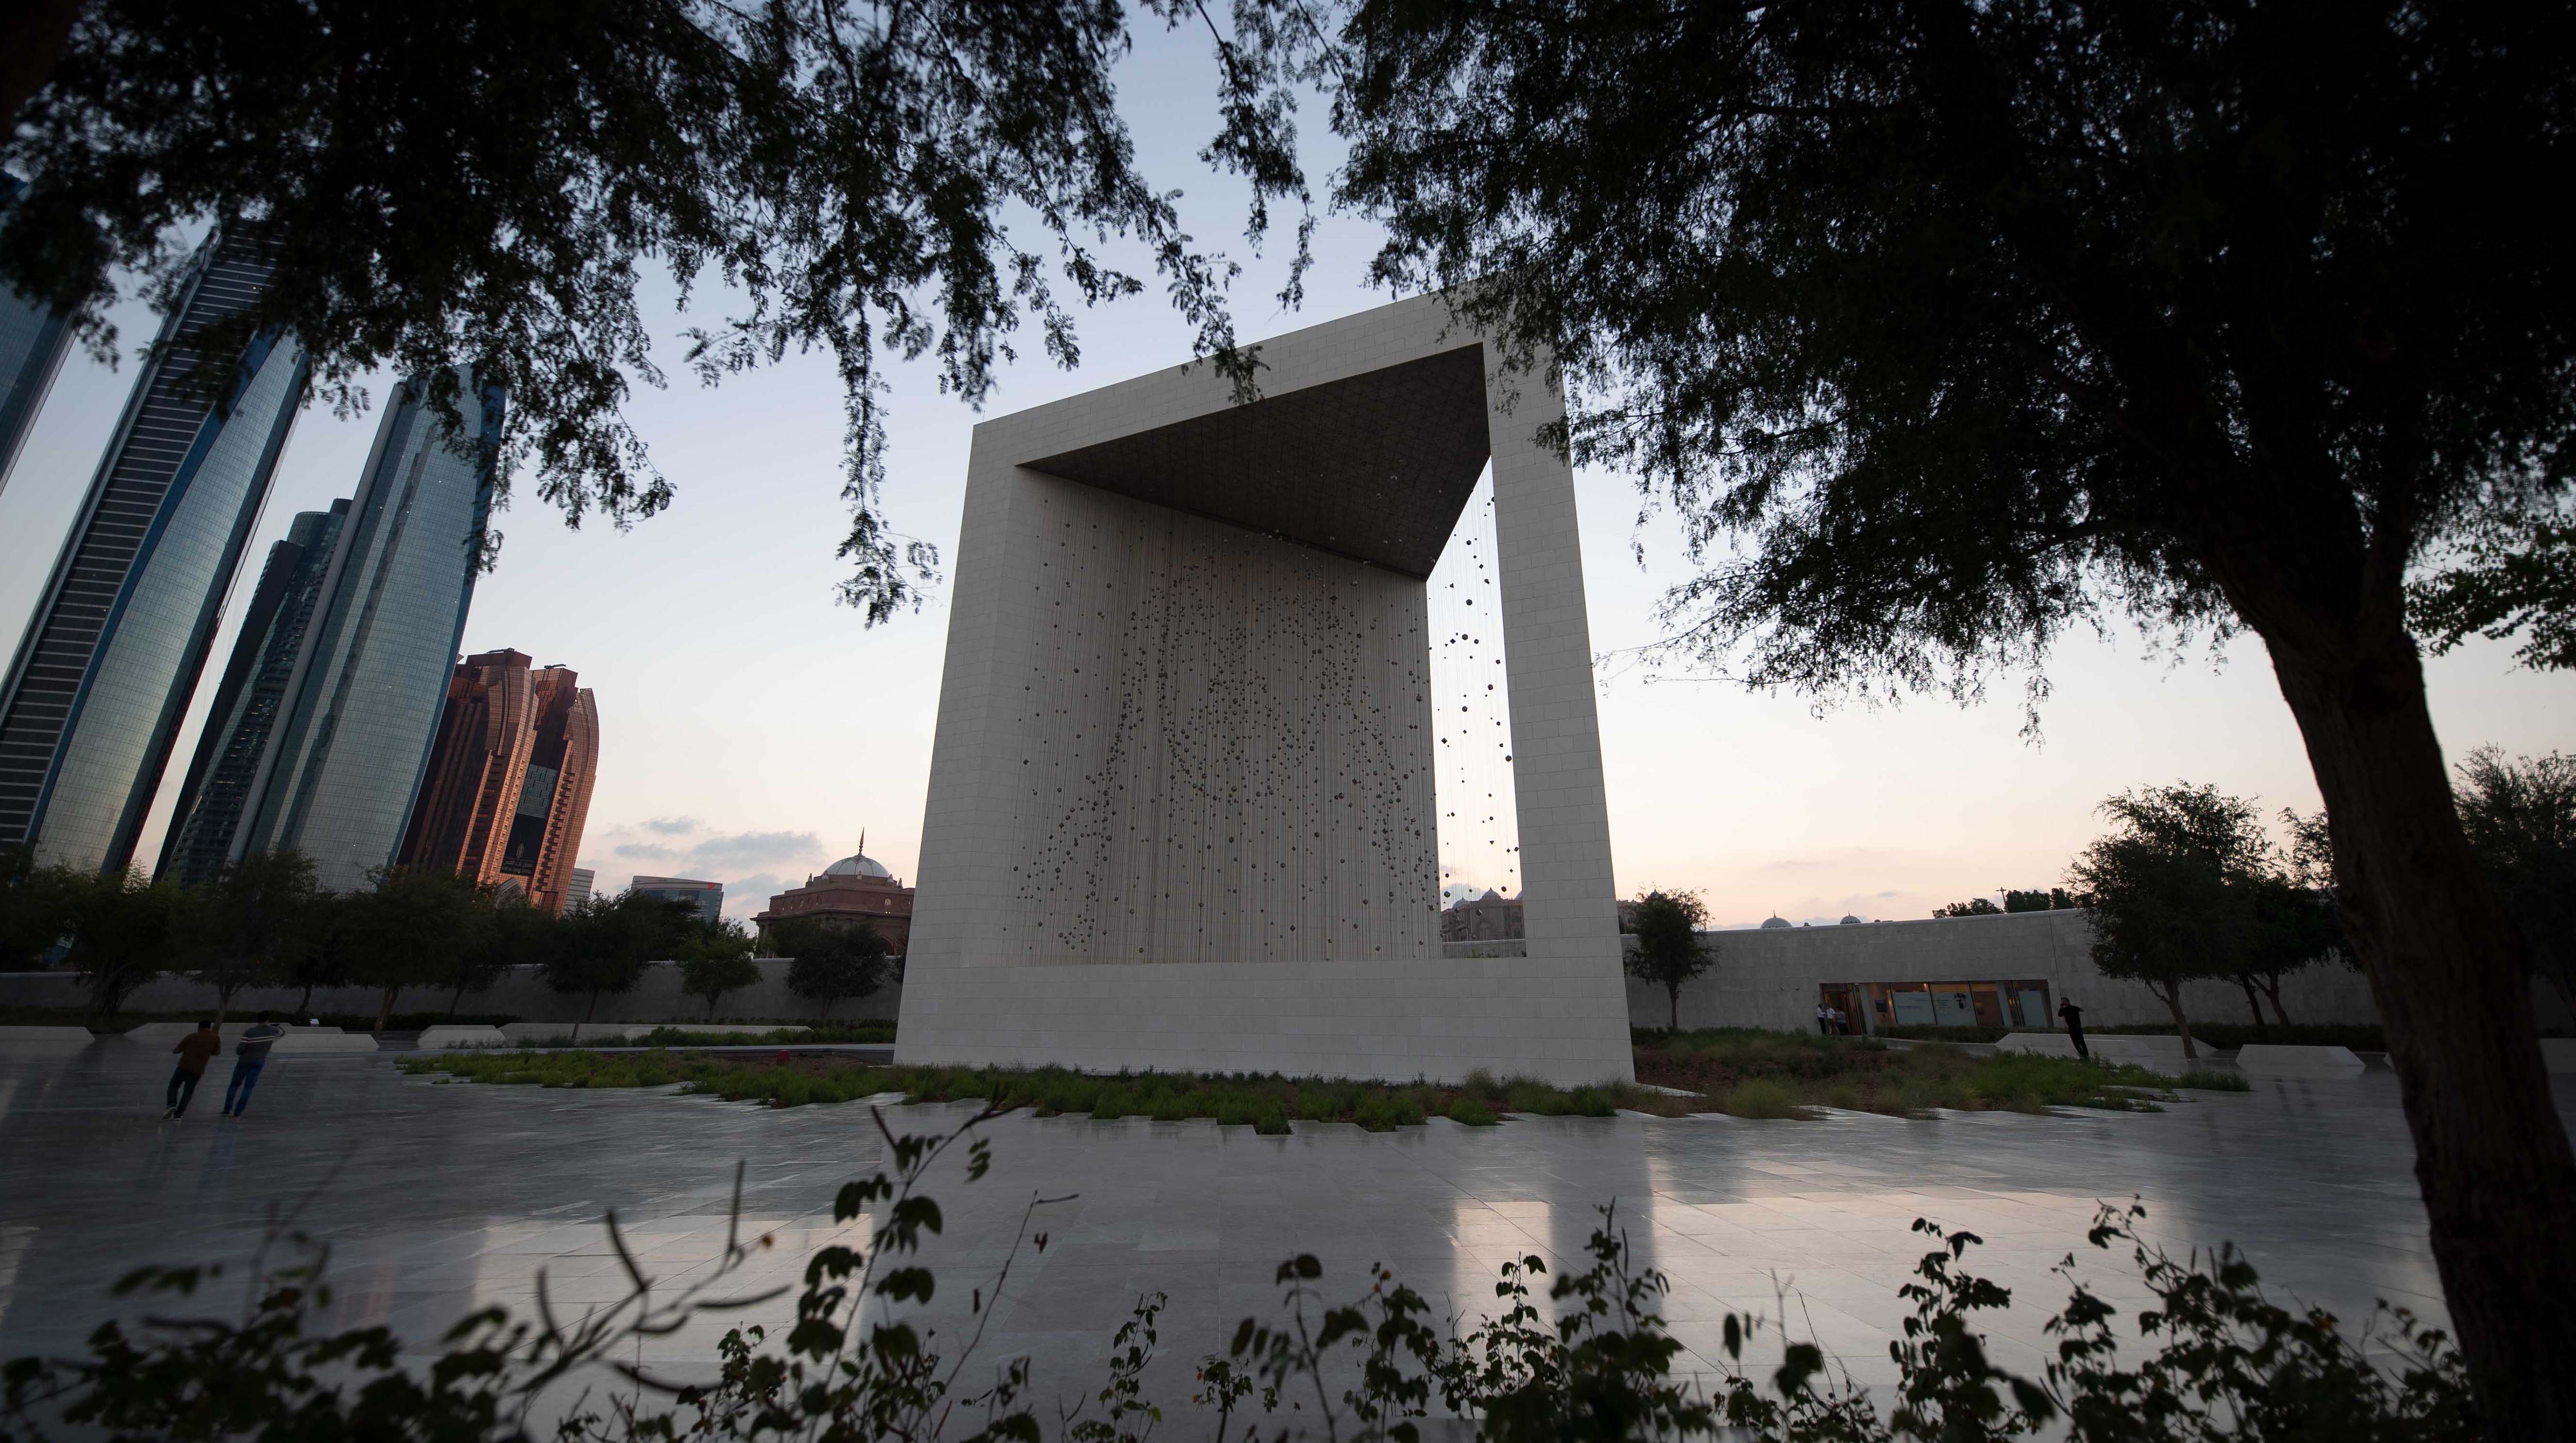 8. Approfondite la storia degli EAU al Founder’s Memorial